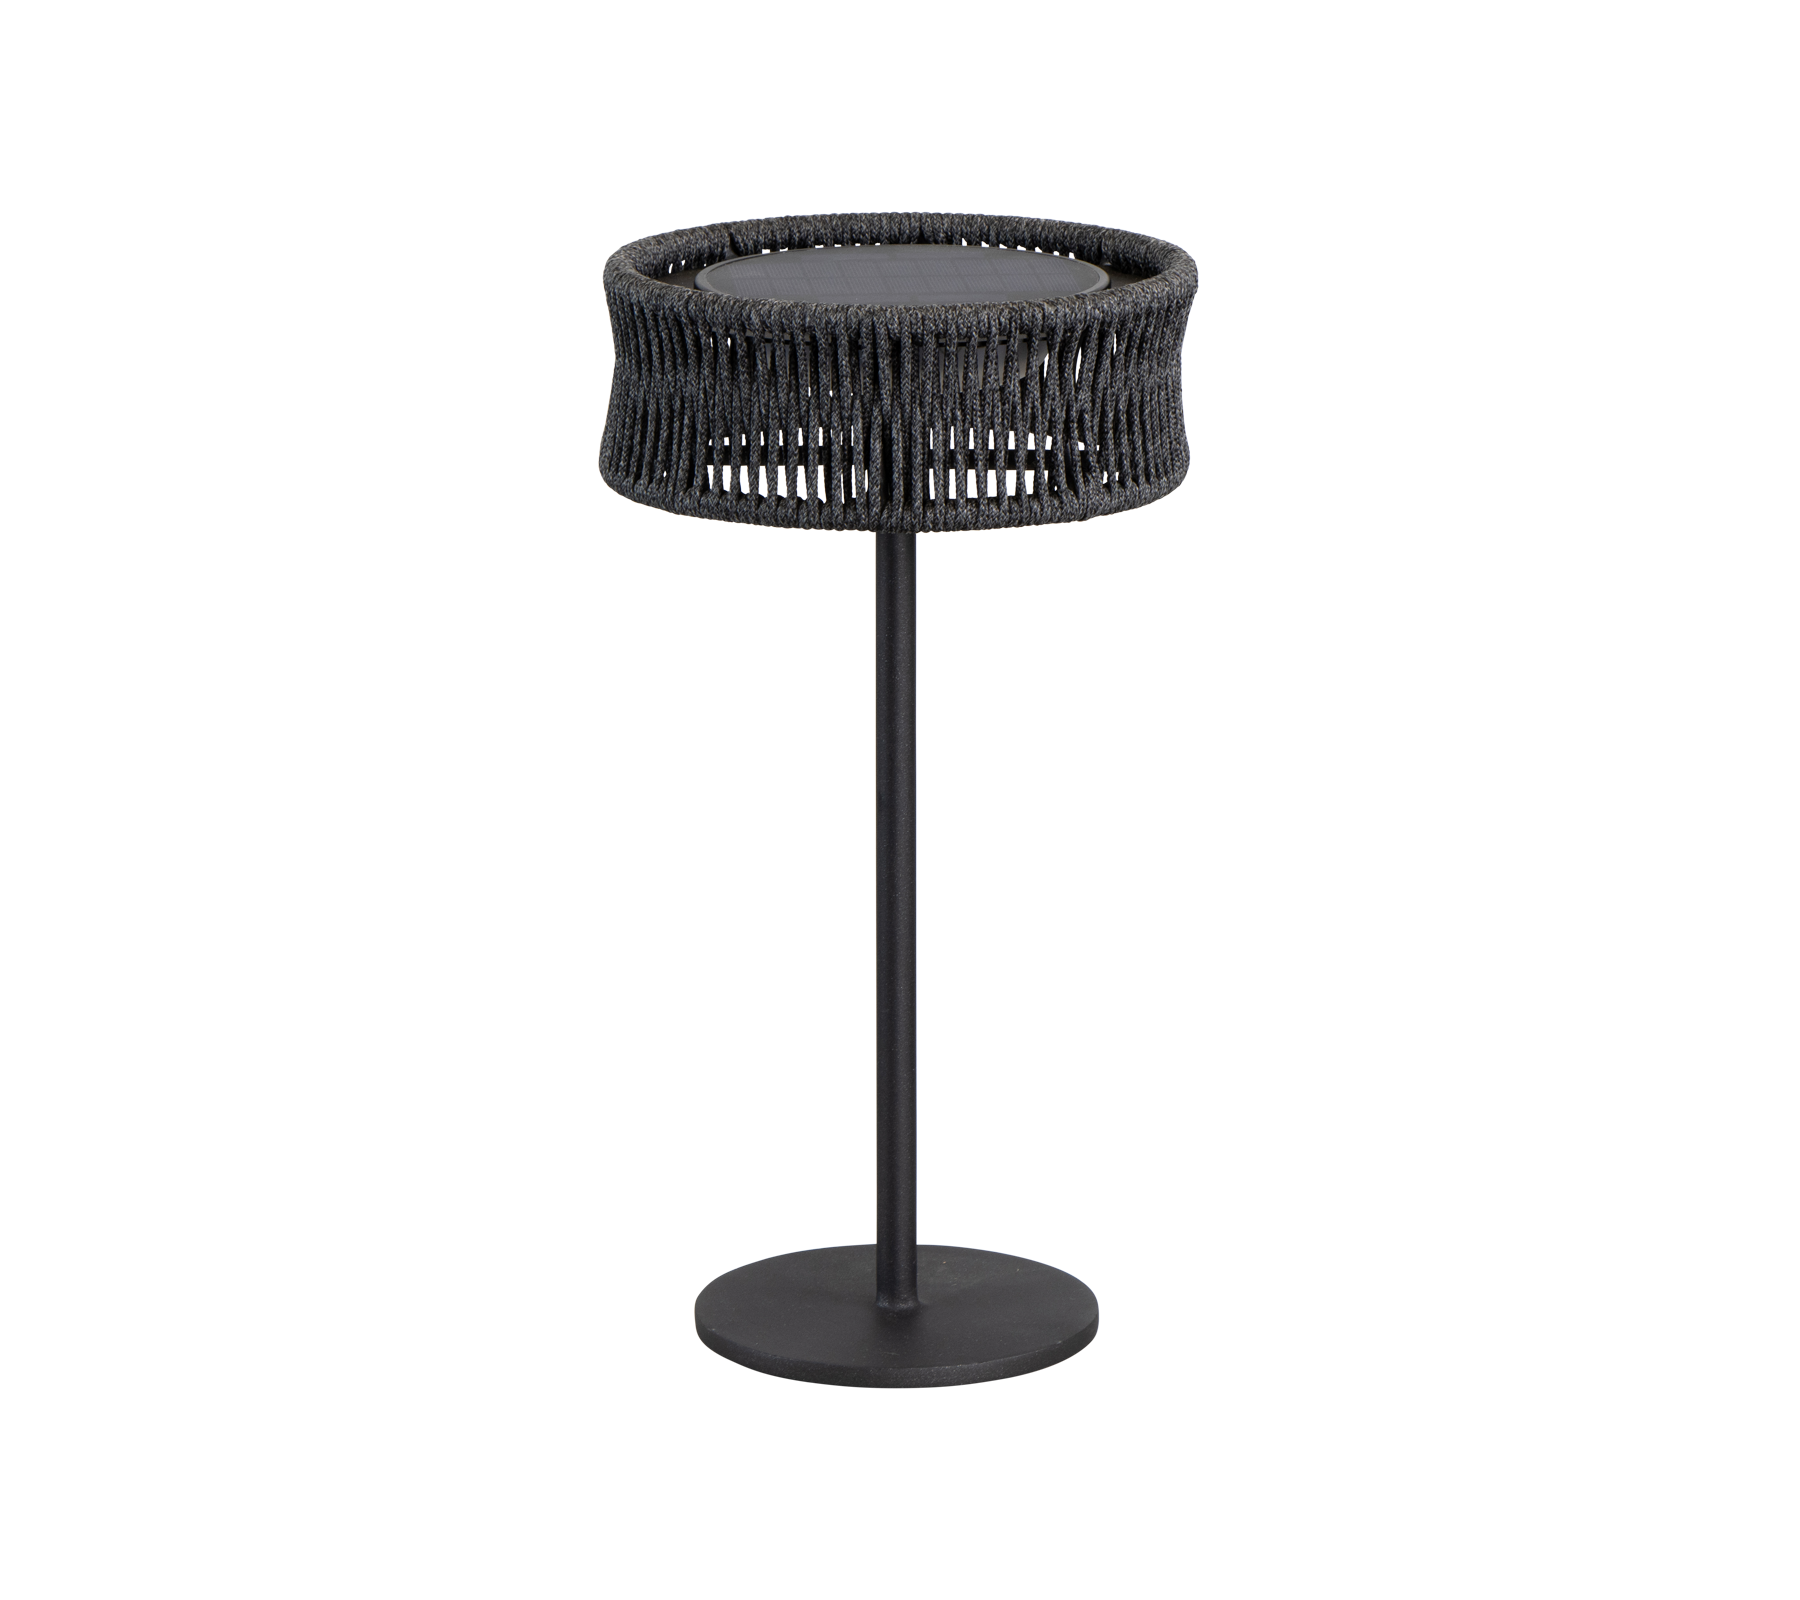 Illusion table lamp, medium